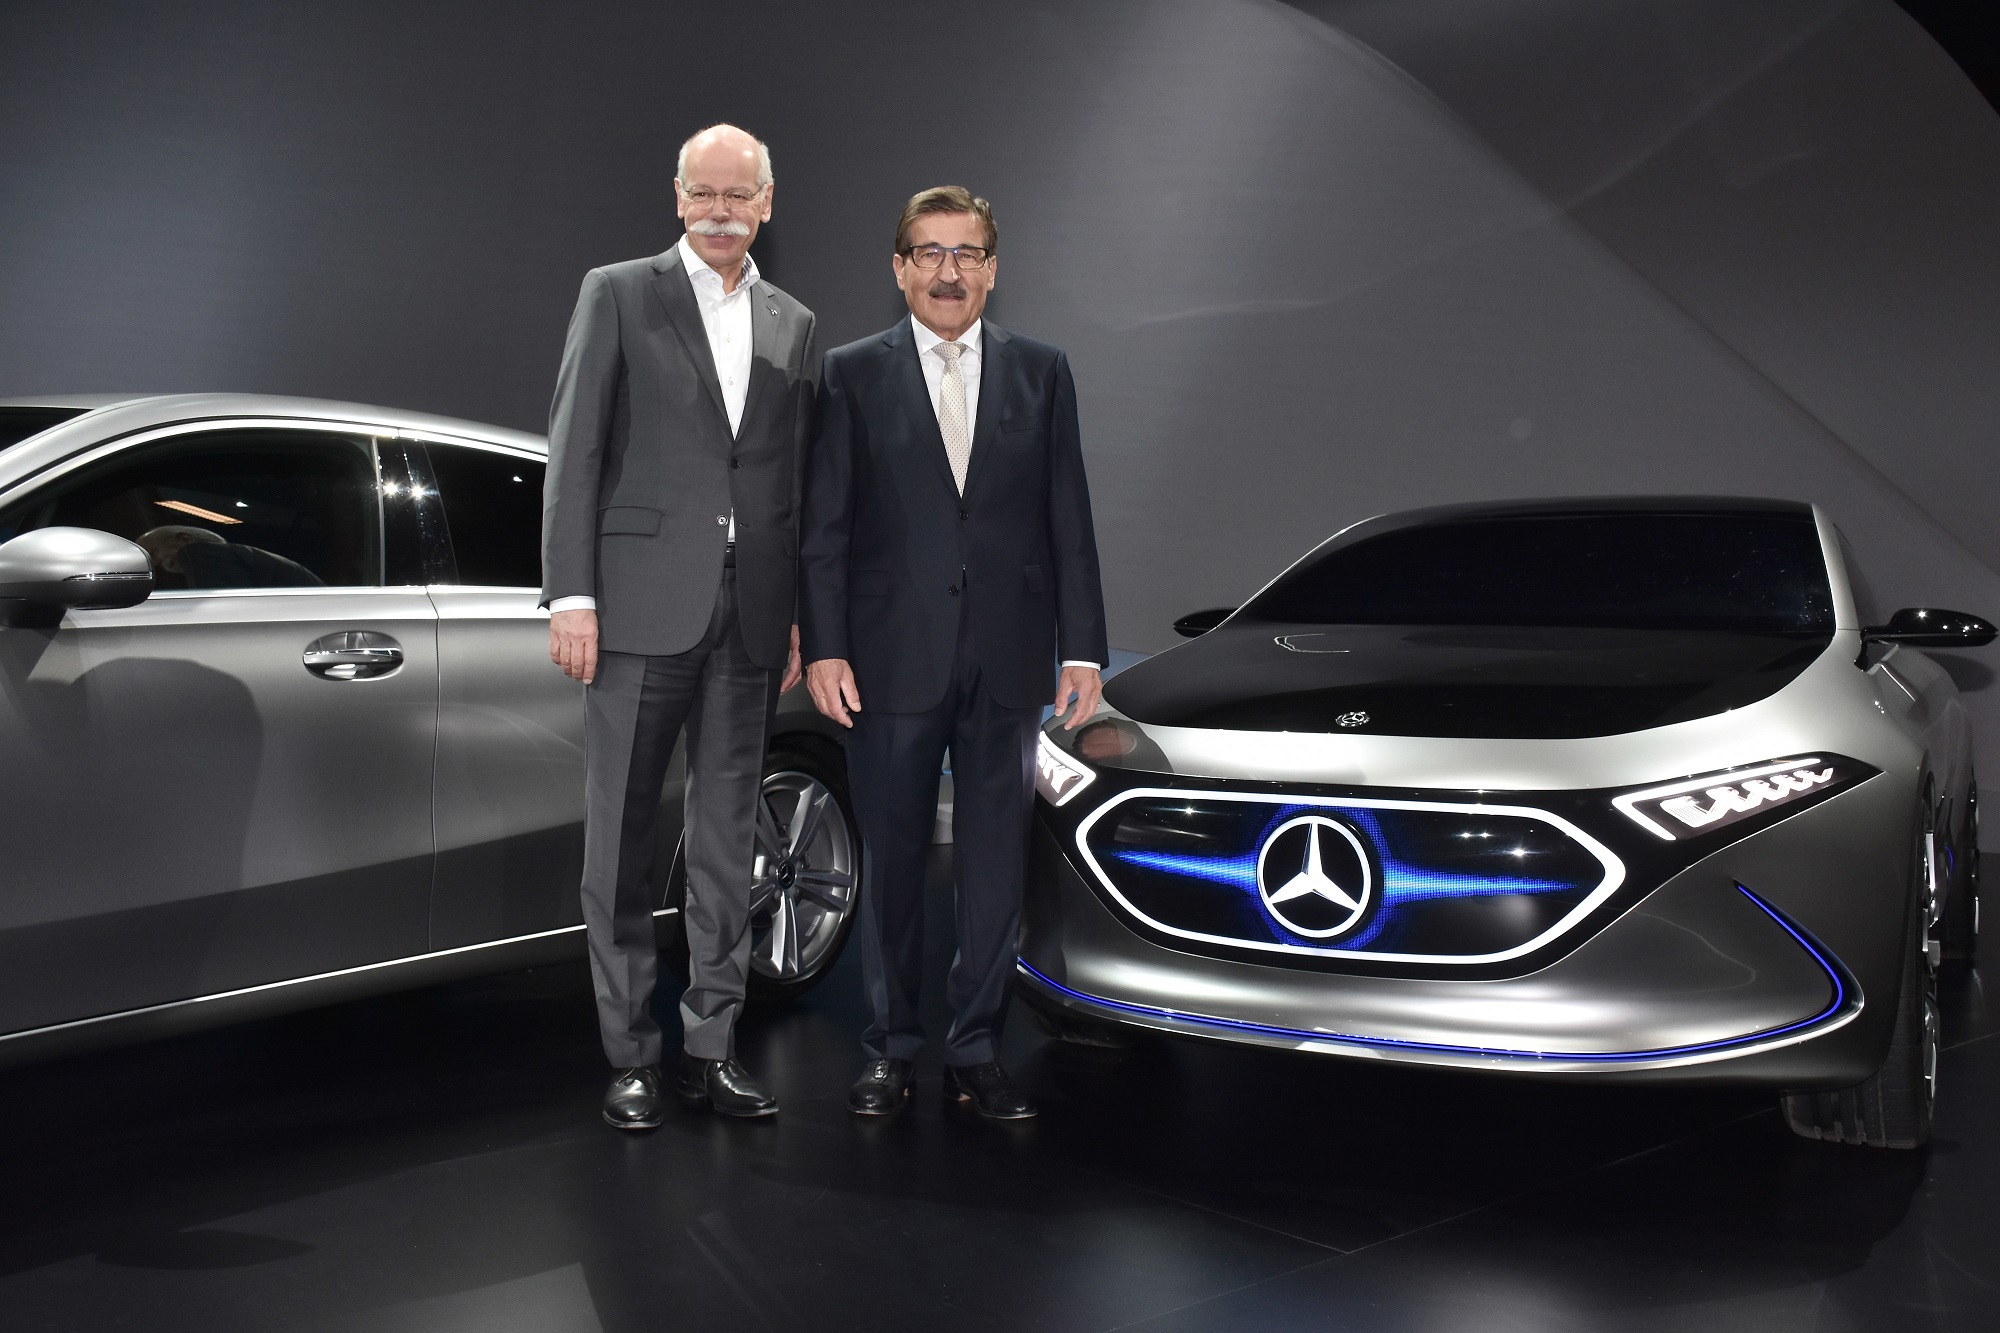 Hauptversammlung der Daimler AG am 5. April 2018 in Berlin. Annual General Meeting of Daimler AG on April 5, 2018 in Berlin.